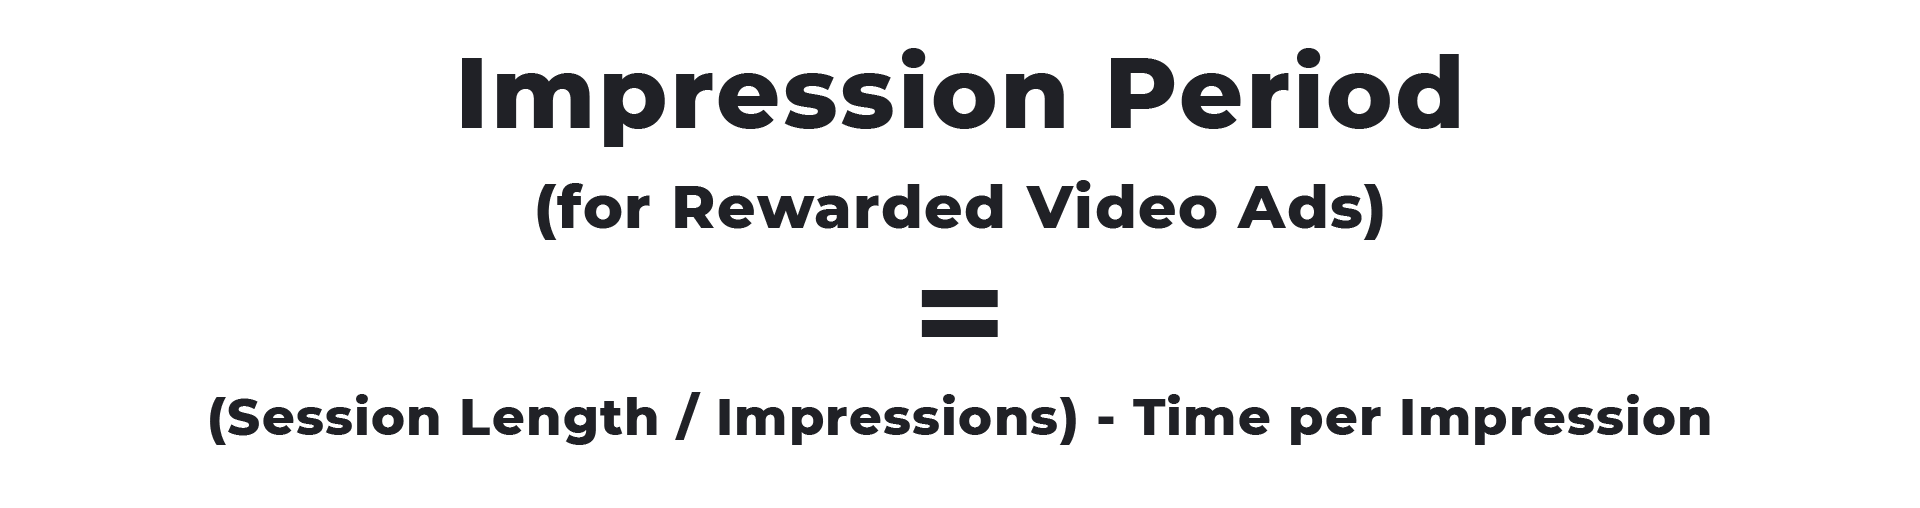 Impression period with Rewarded Ads calculation